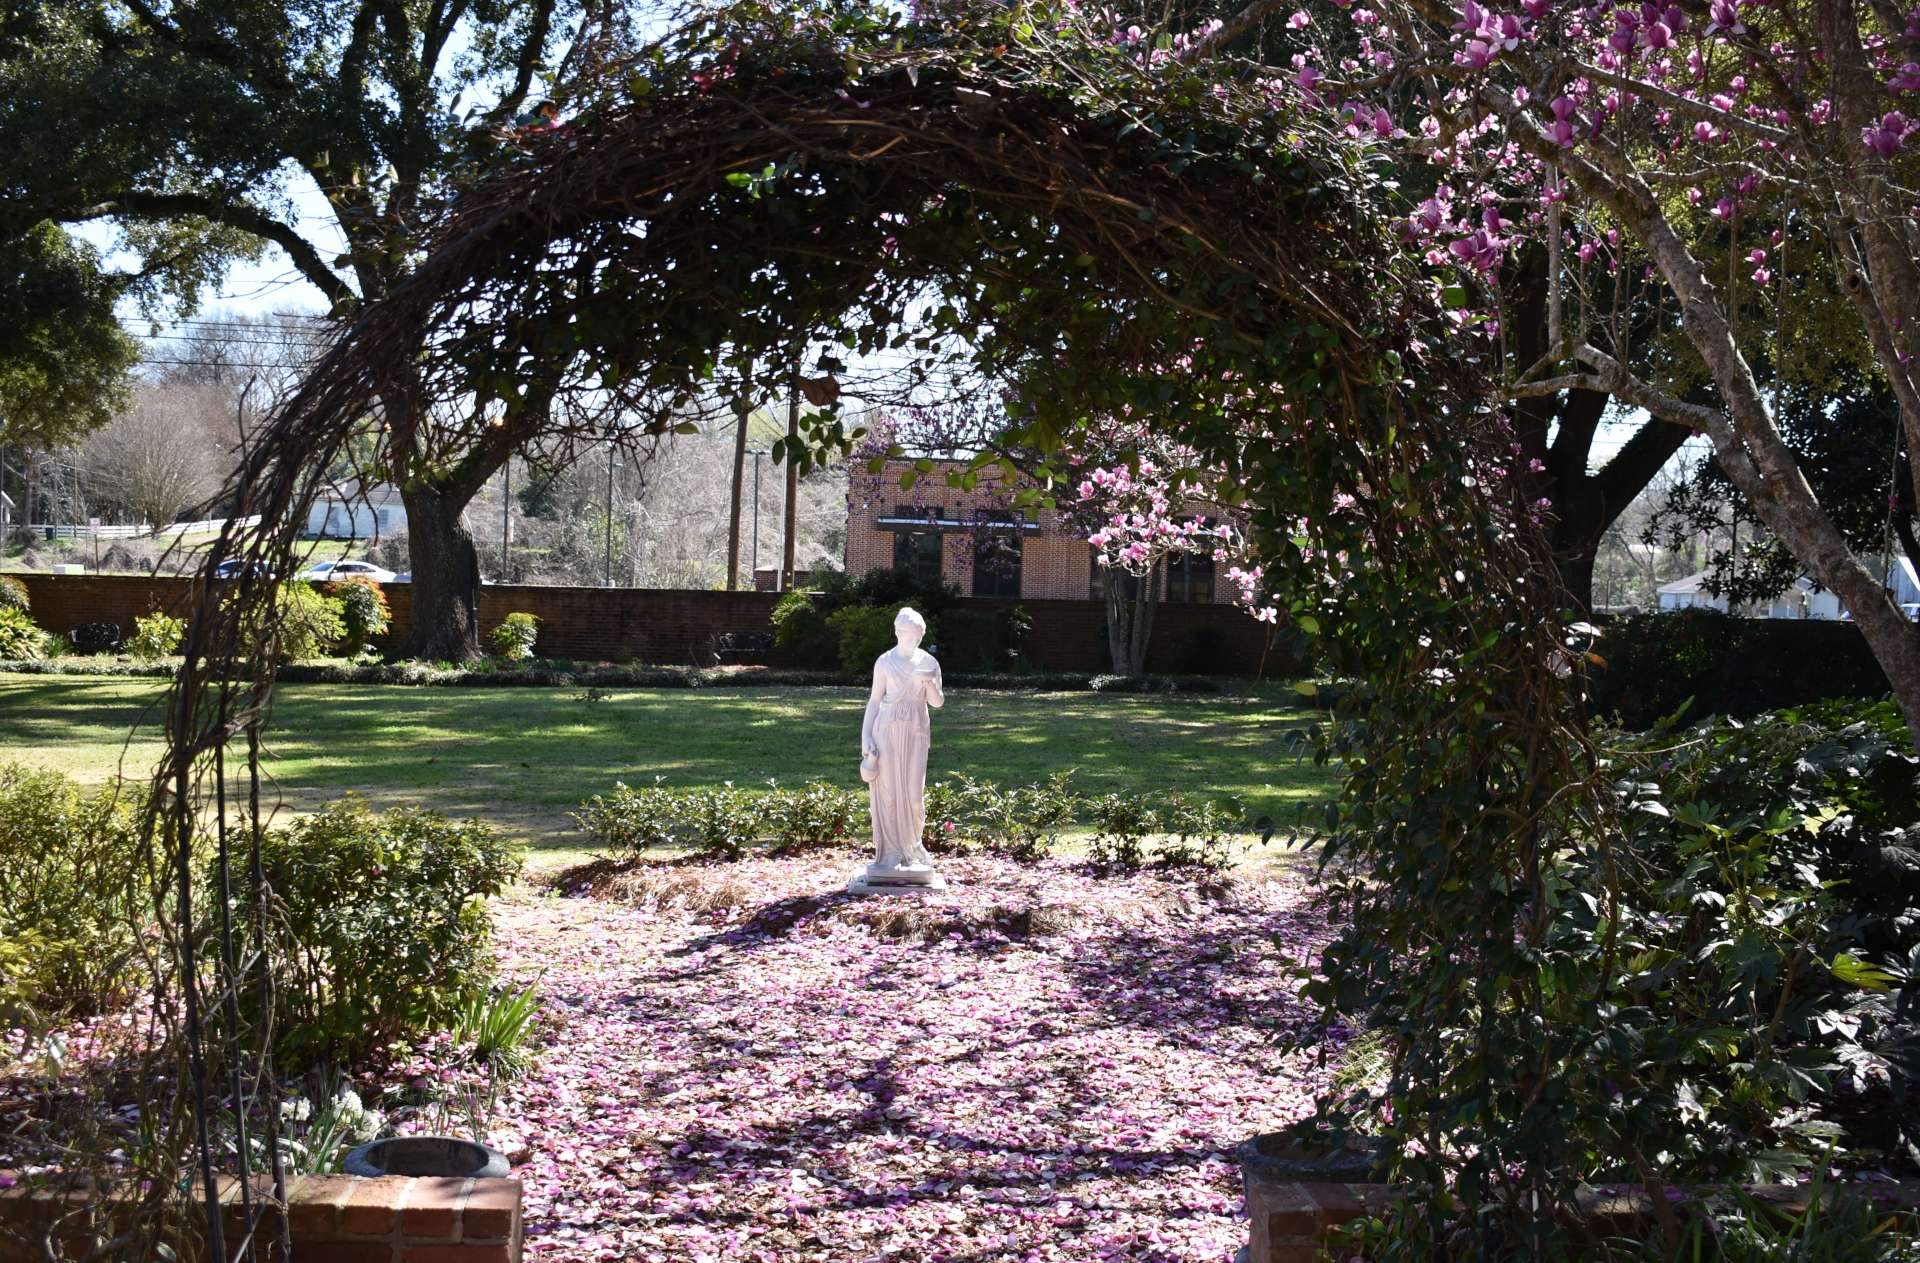 Female statue in garden through arch, magnolia petals on the ground